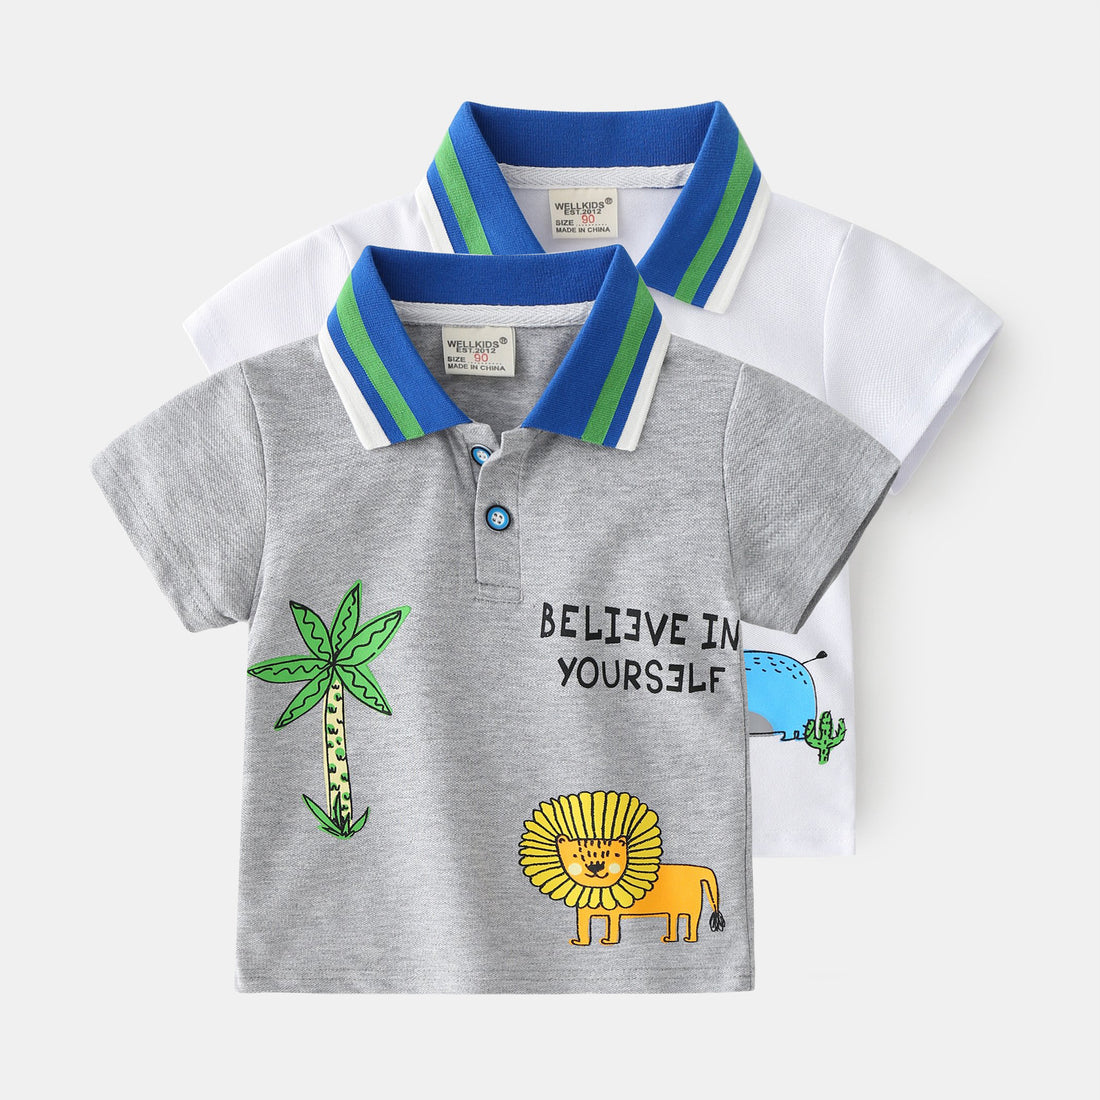 [513198] - Atasan Kaos Polo Anak Cowok Import - Motif Believe In Yourself